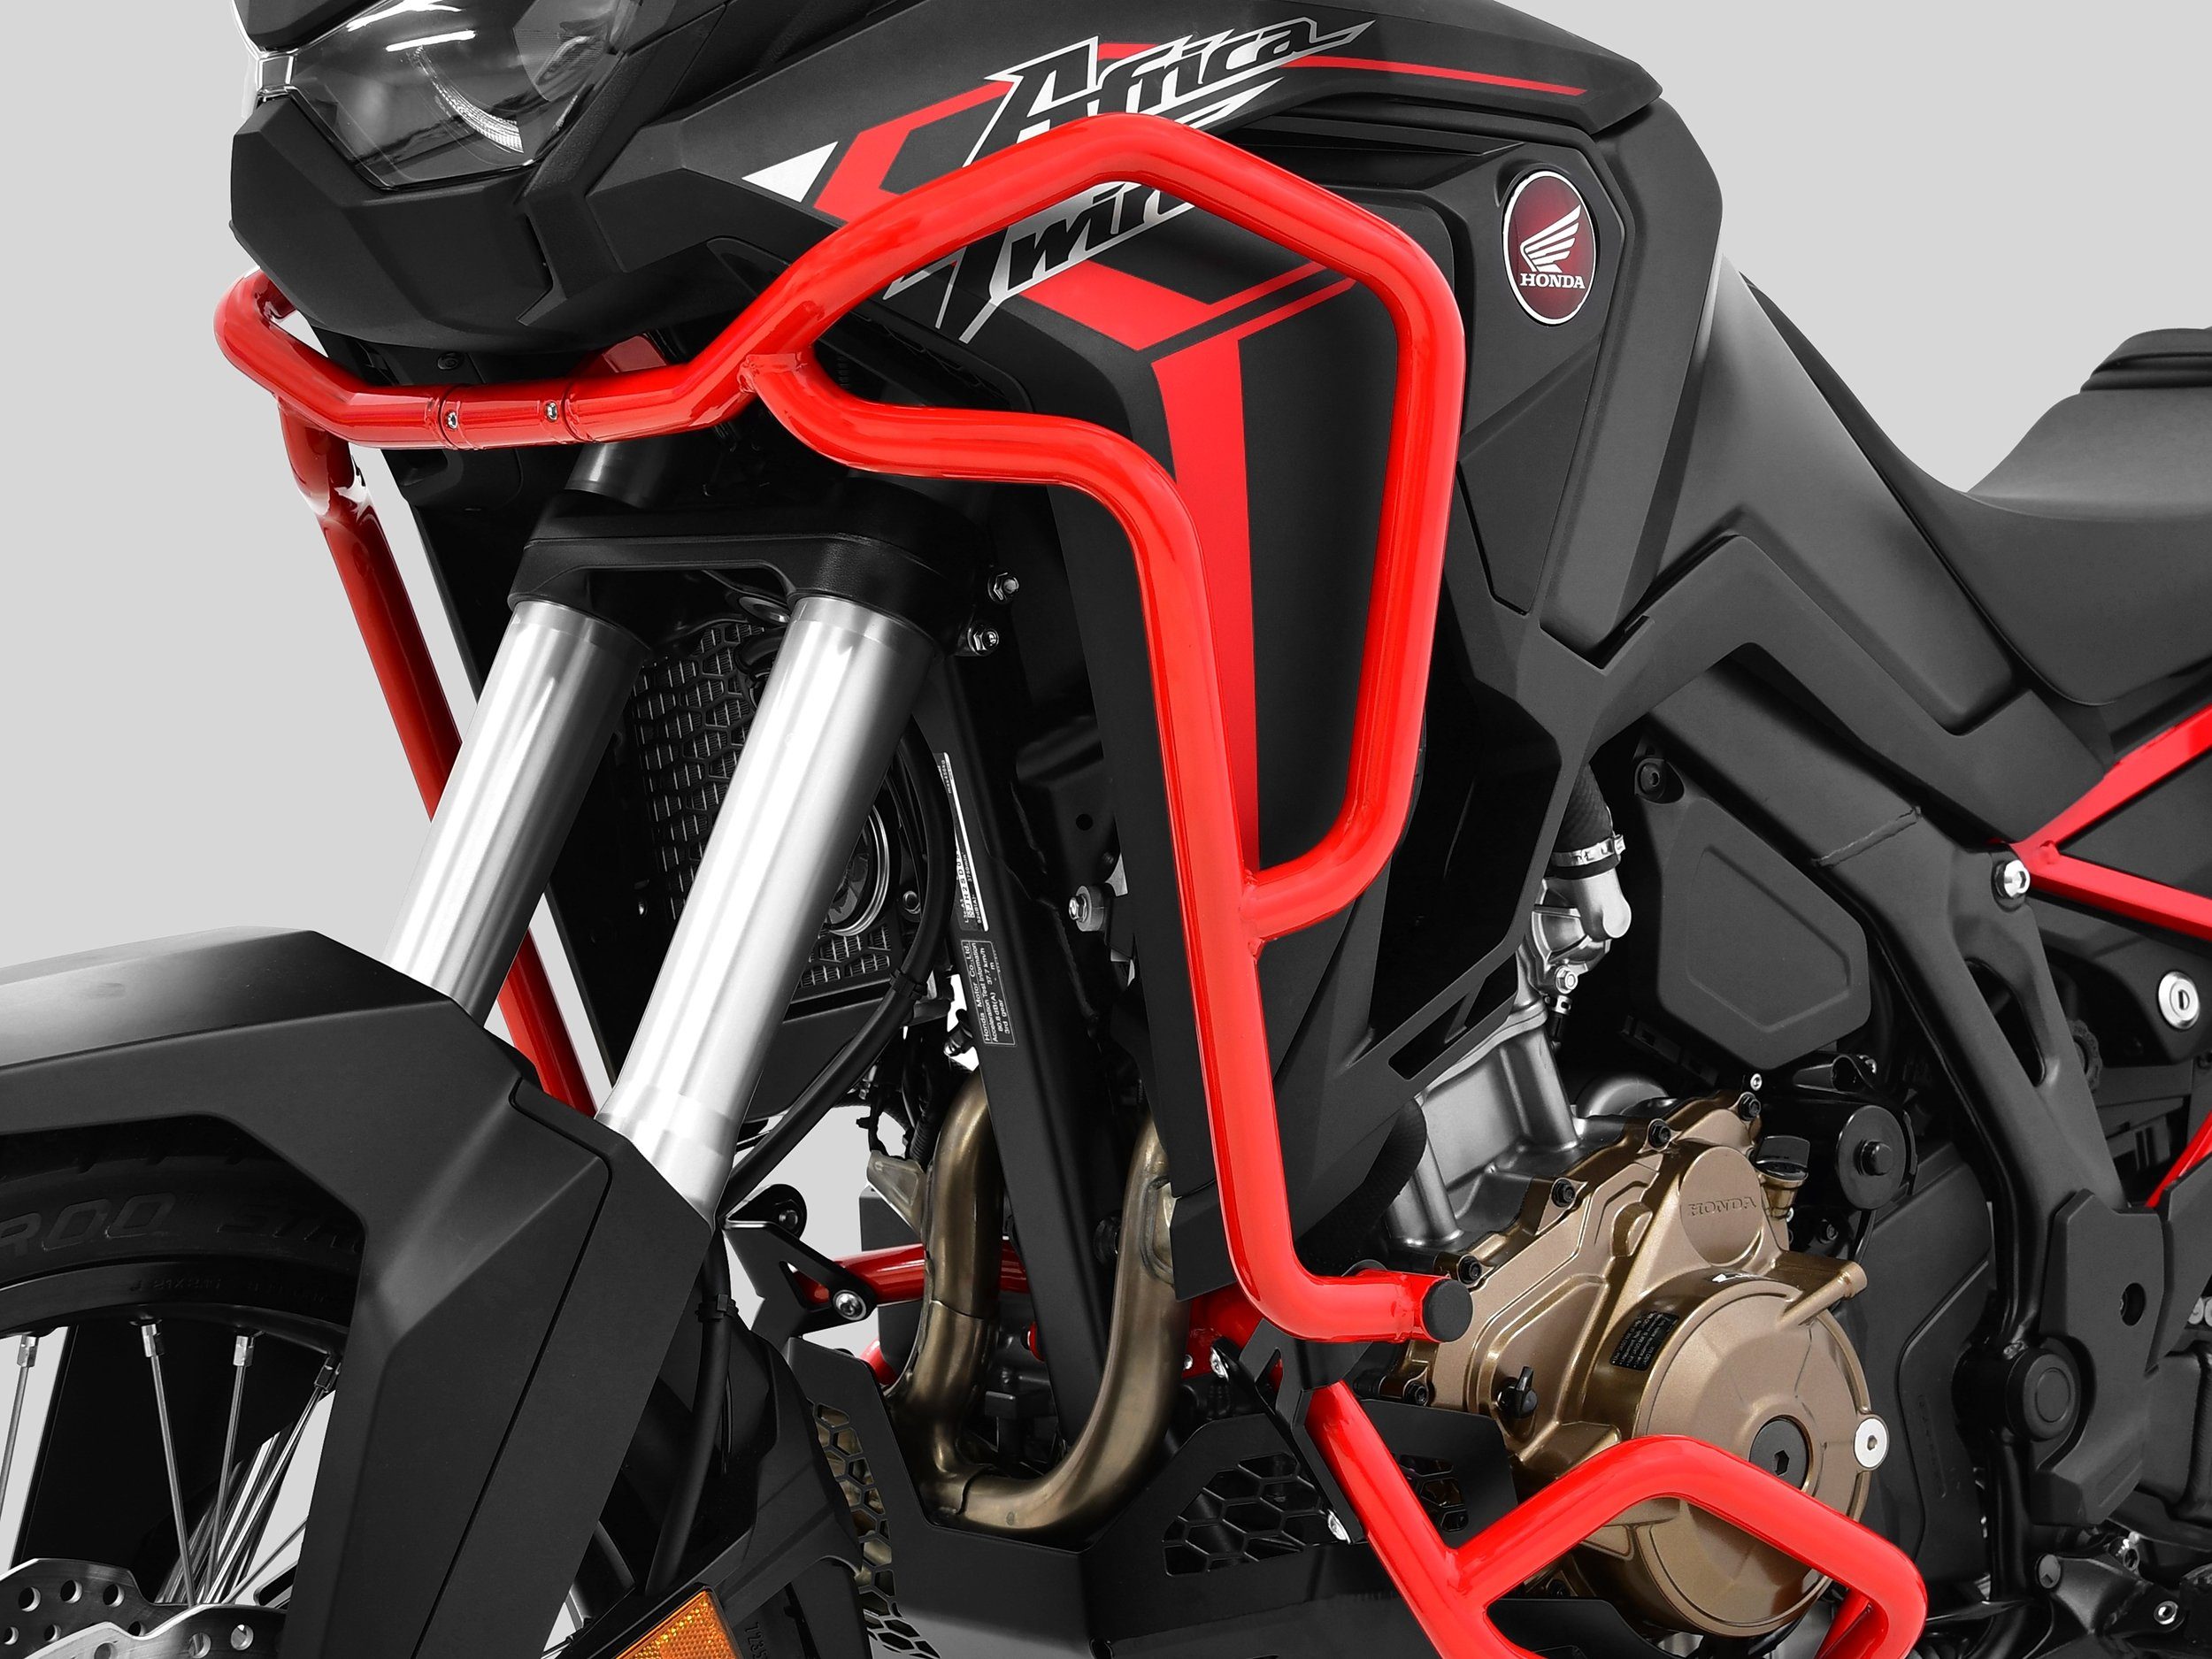 ZIEGER Motor-Schutzhülle Sturzbügel Verkleidung kompatibel mit Honda CRF 1100 L Africa Twin rot